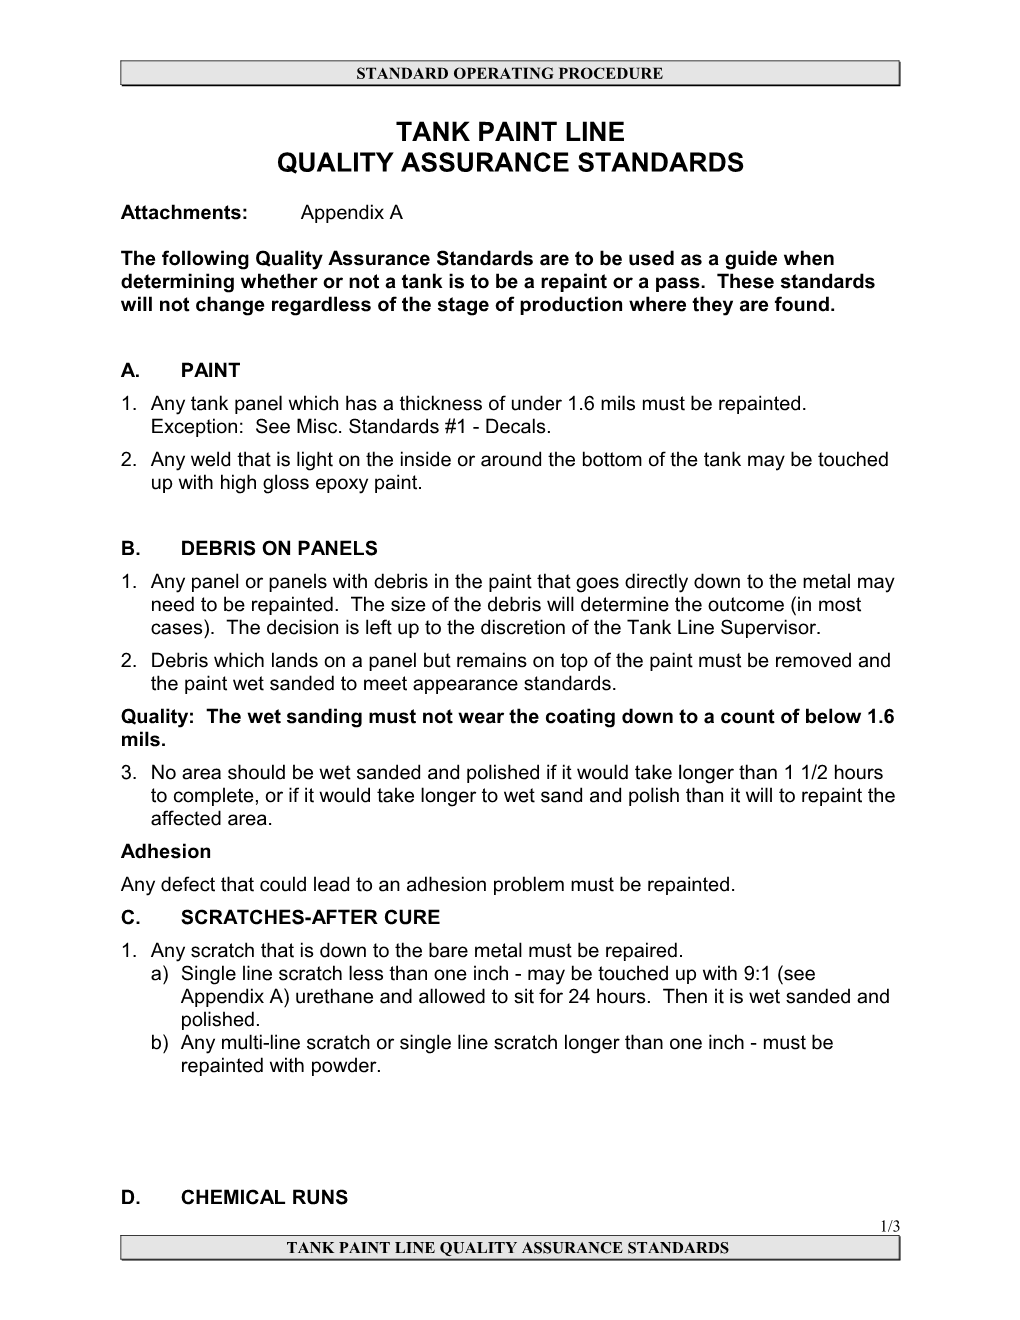 Quality Assurance Standards